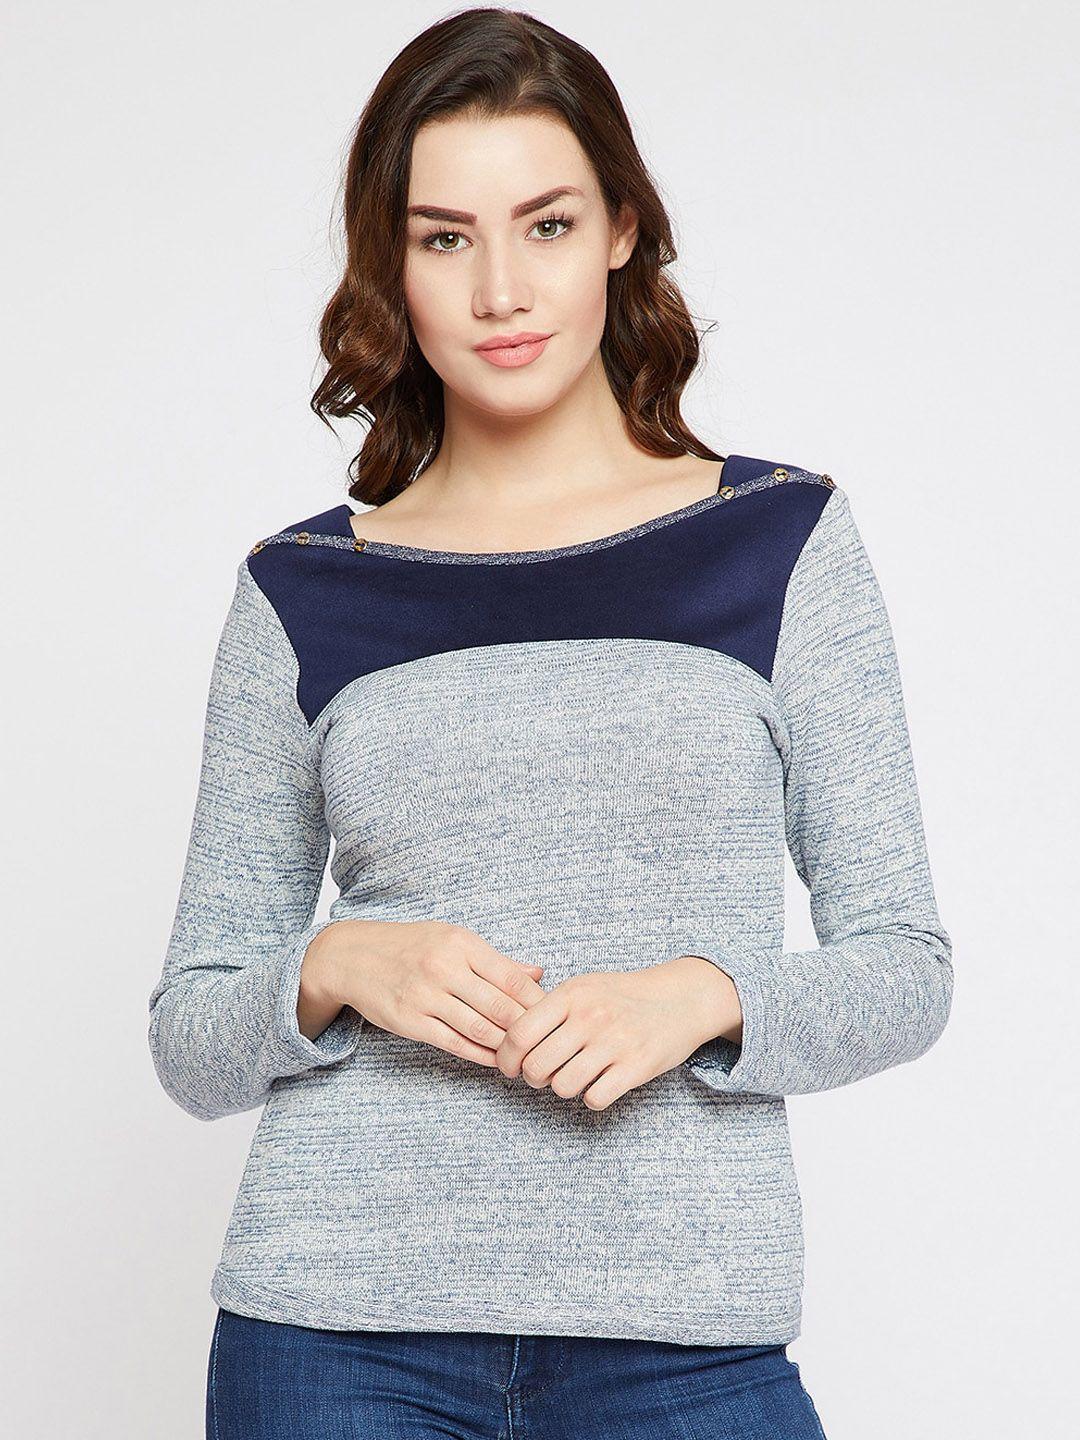 carlton-london-women-navy-blue-solid-pullover-sweater